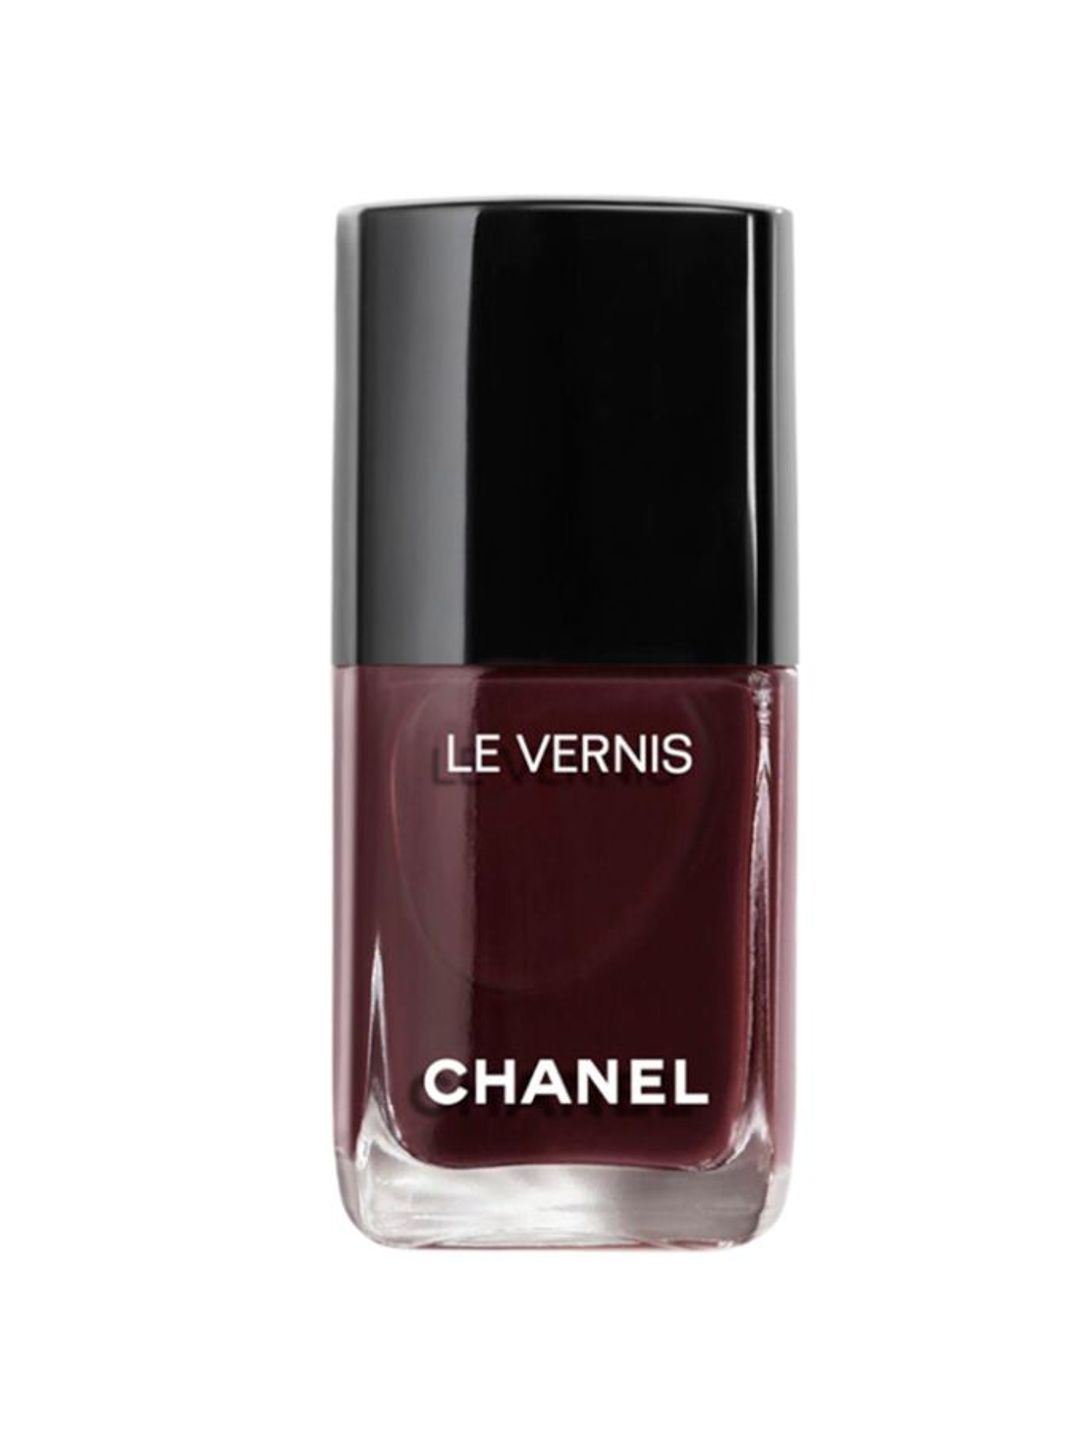 Chanel Le Vernis polish